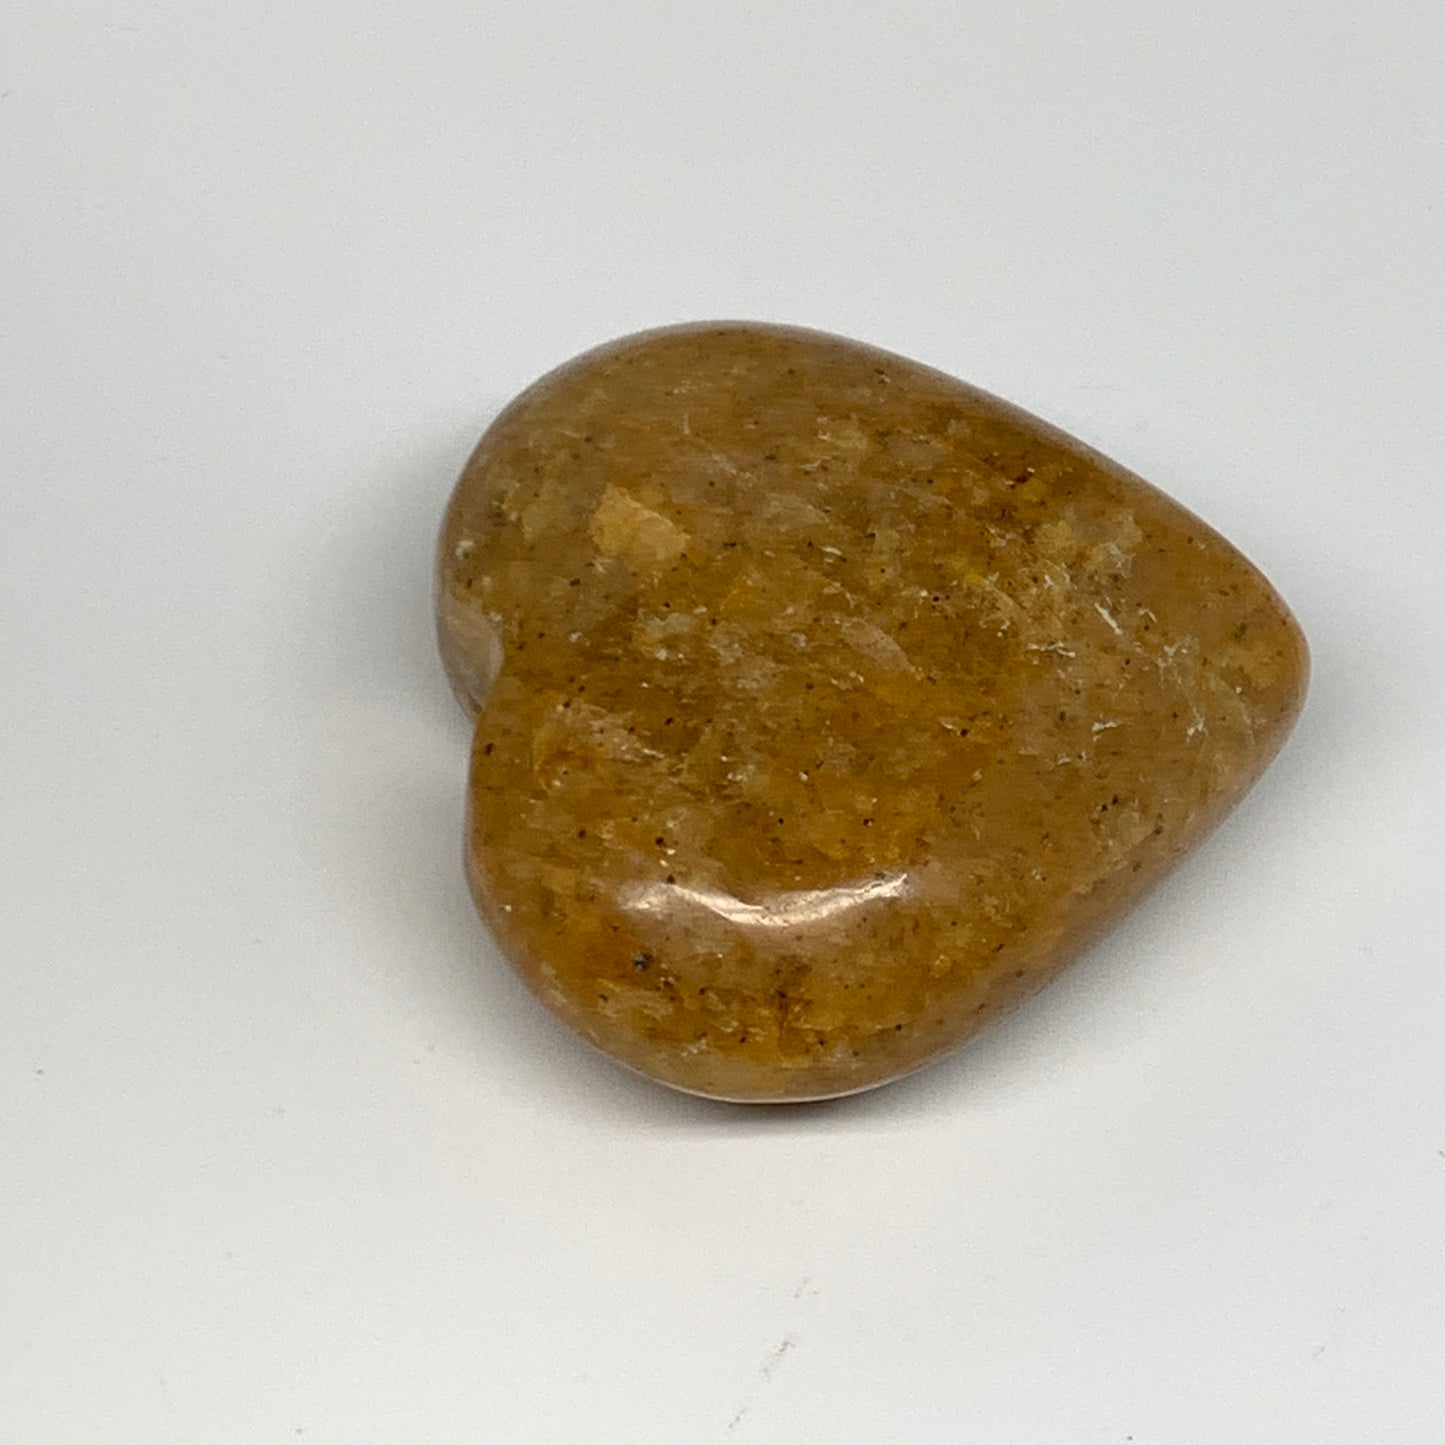 80g, 1.9"x2.1"x0.9", Natural Golden Quartz Heart Small Polished Crystal, B27108